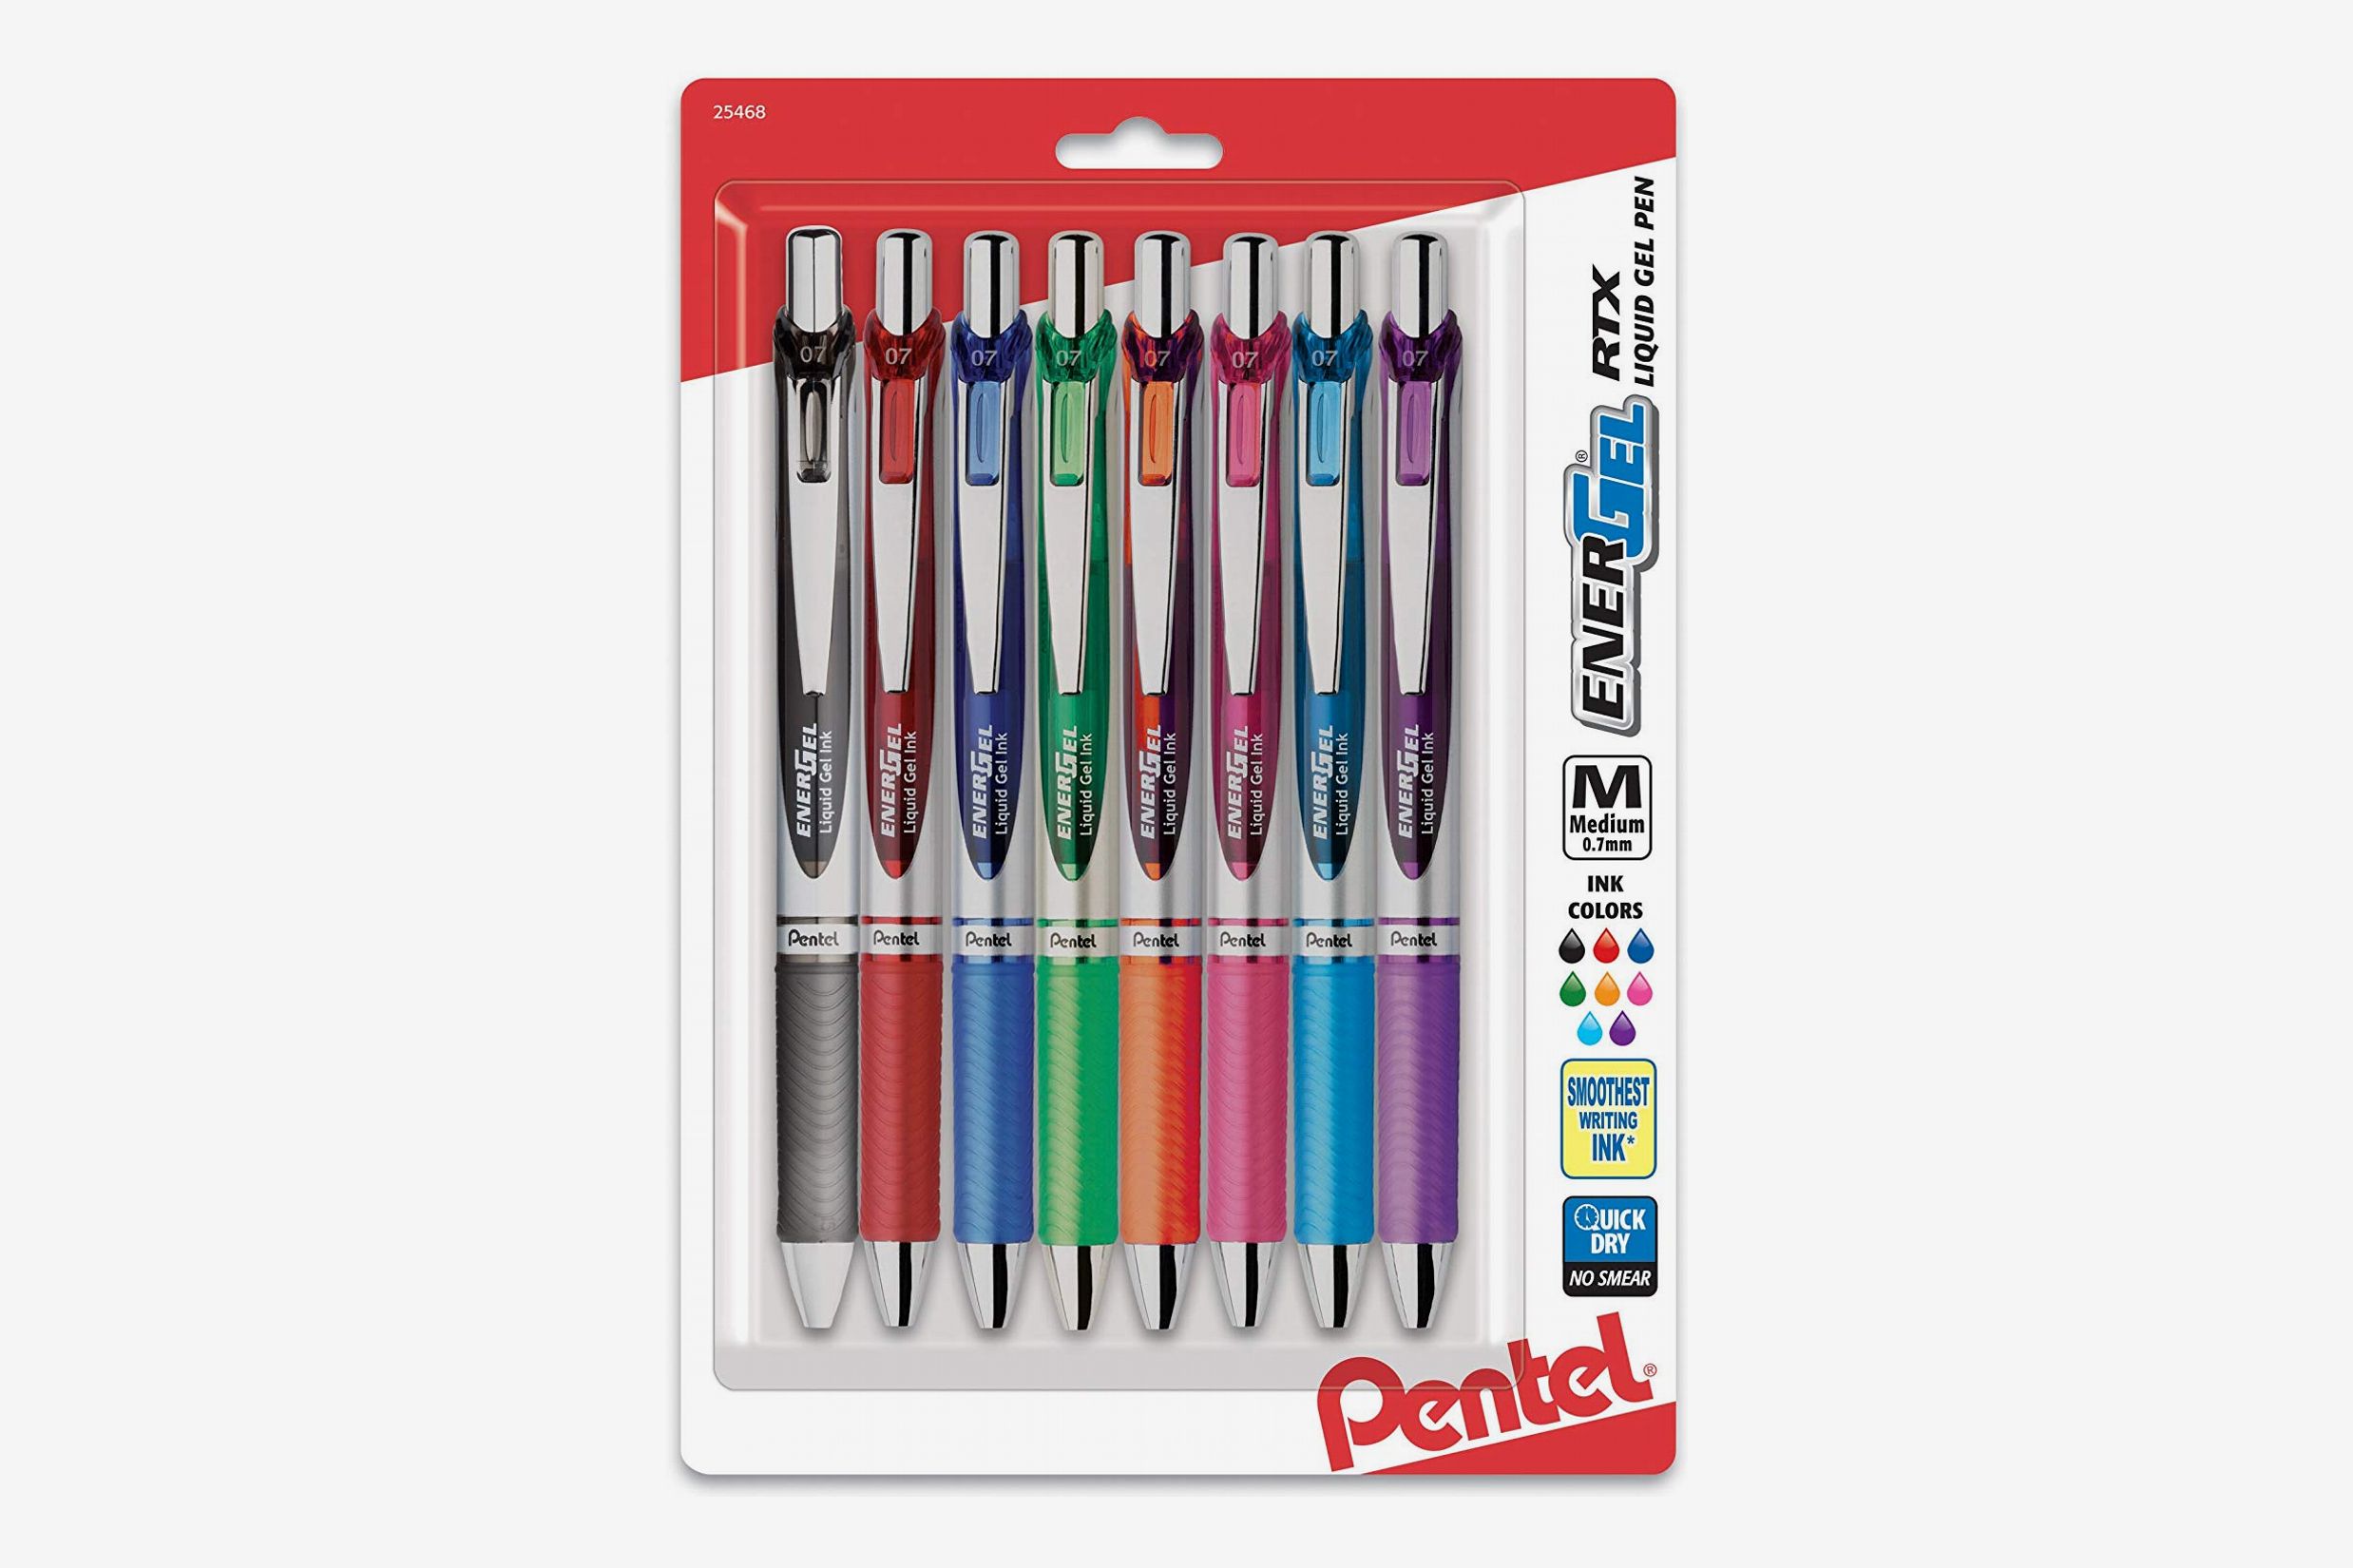 4 Color 0.5mm Medium Gel Pen Plastic Pen Business Office School Gift 